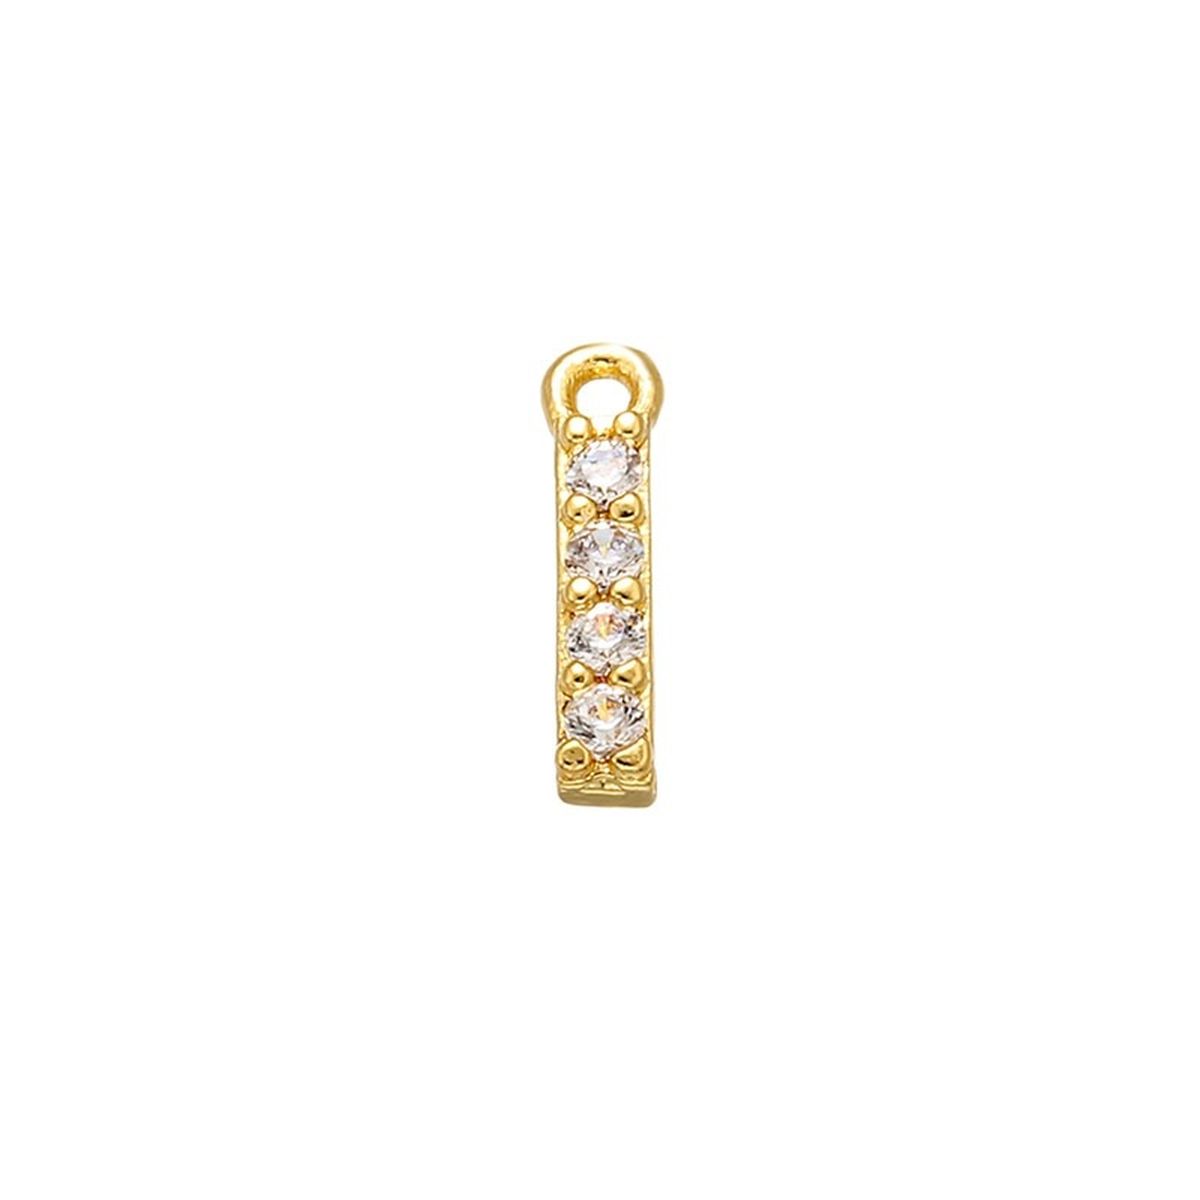 Alphabets Initial Letter American Diamonds Gold Copper Necklace Pendant Chain For Women